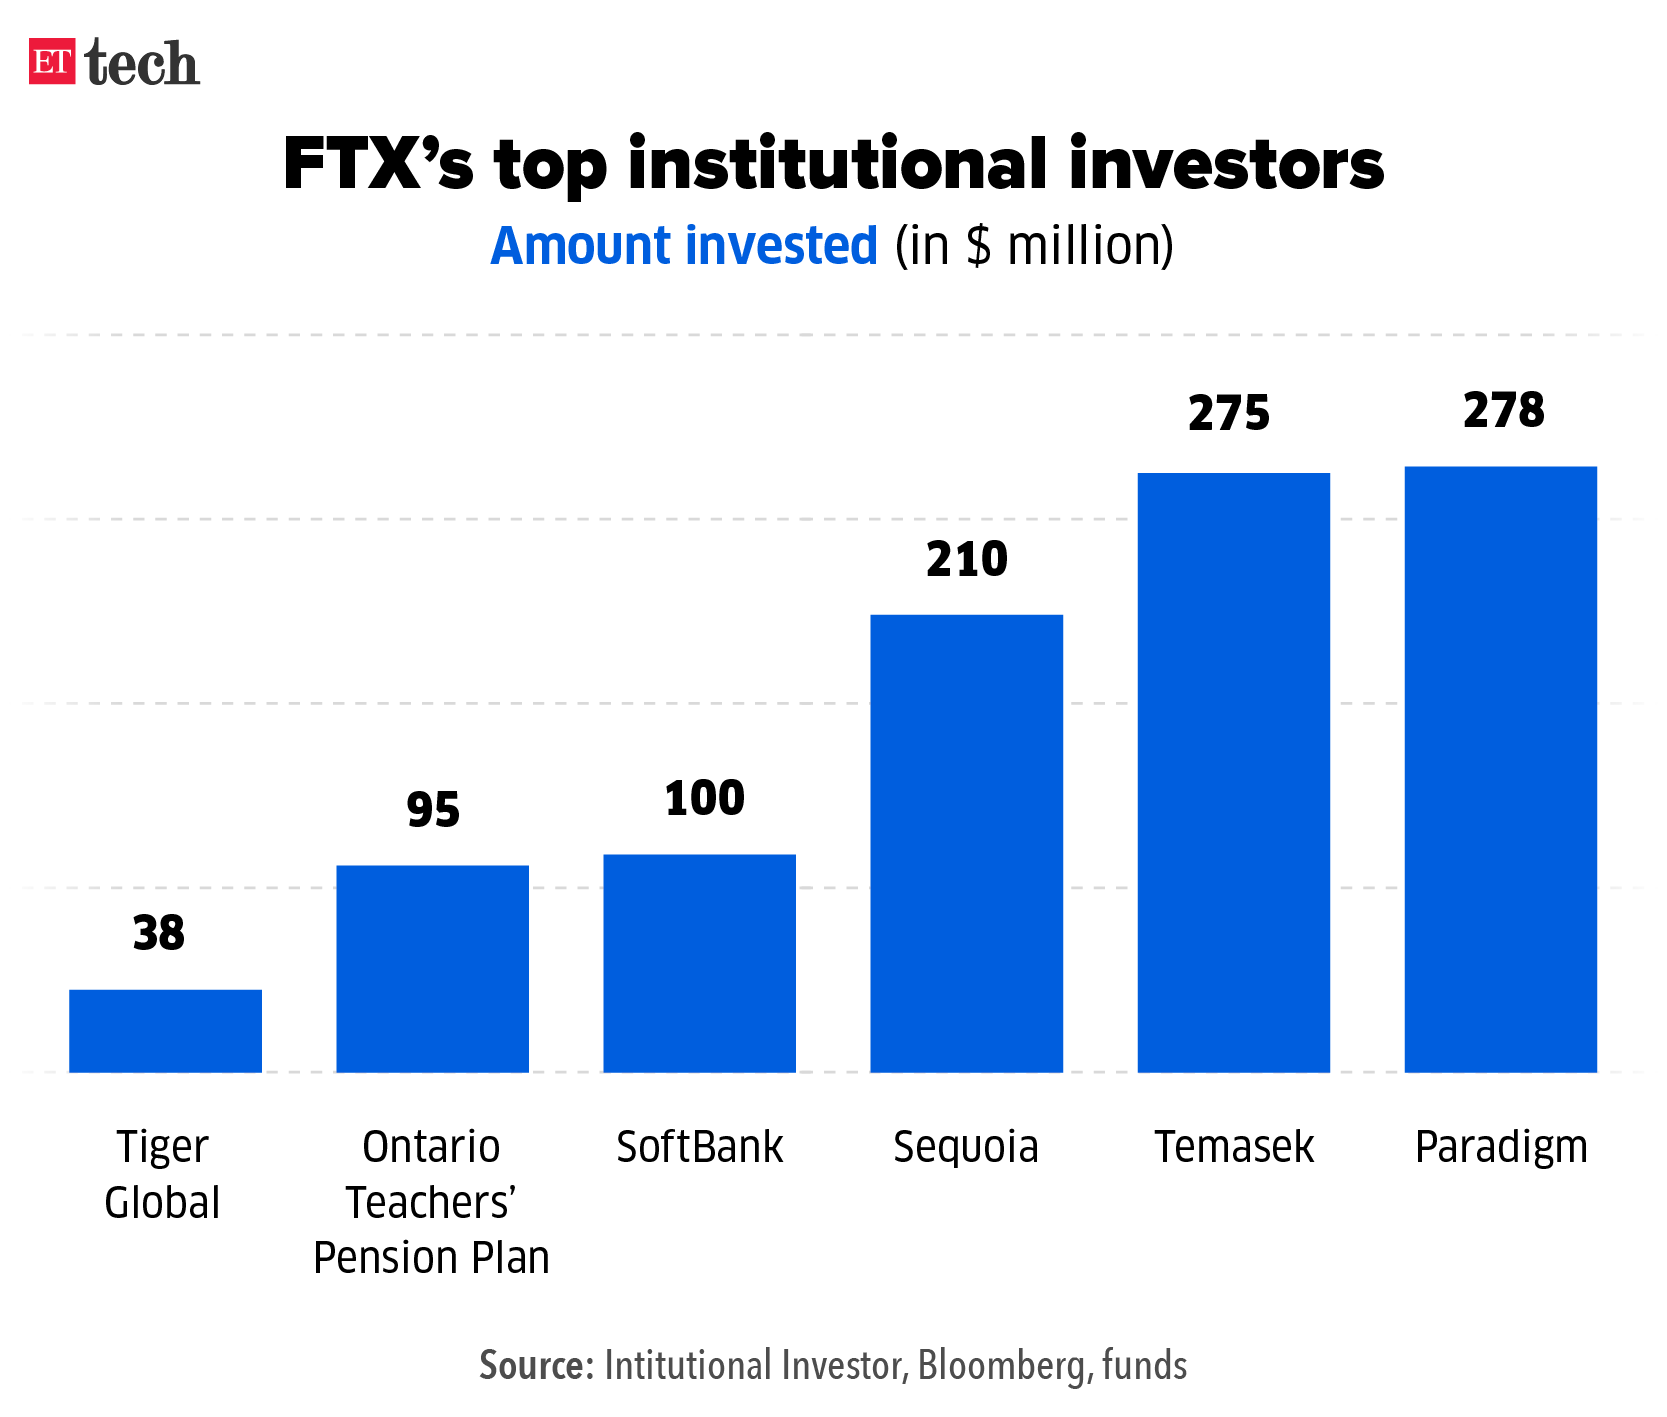 Major institutional investors in FTXs